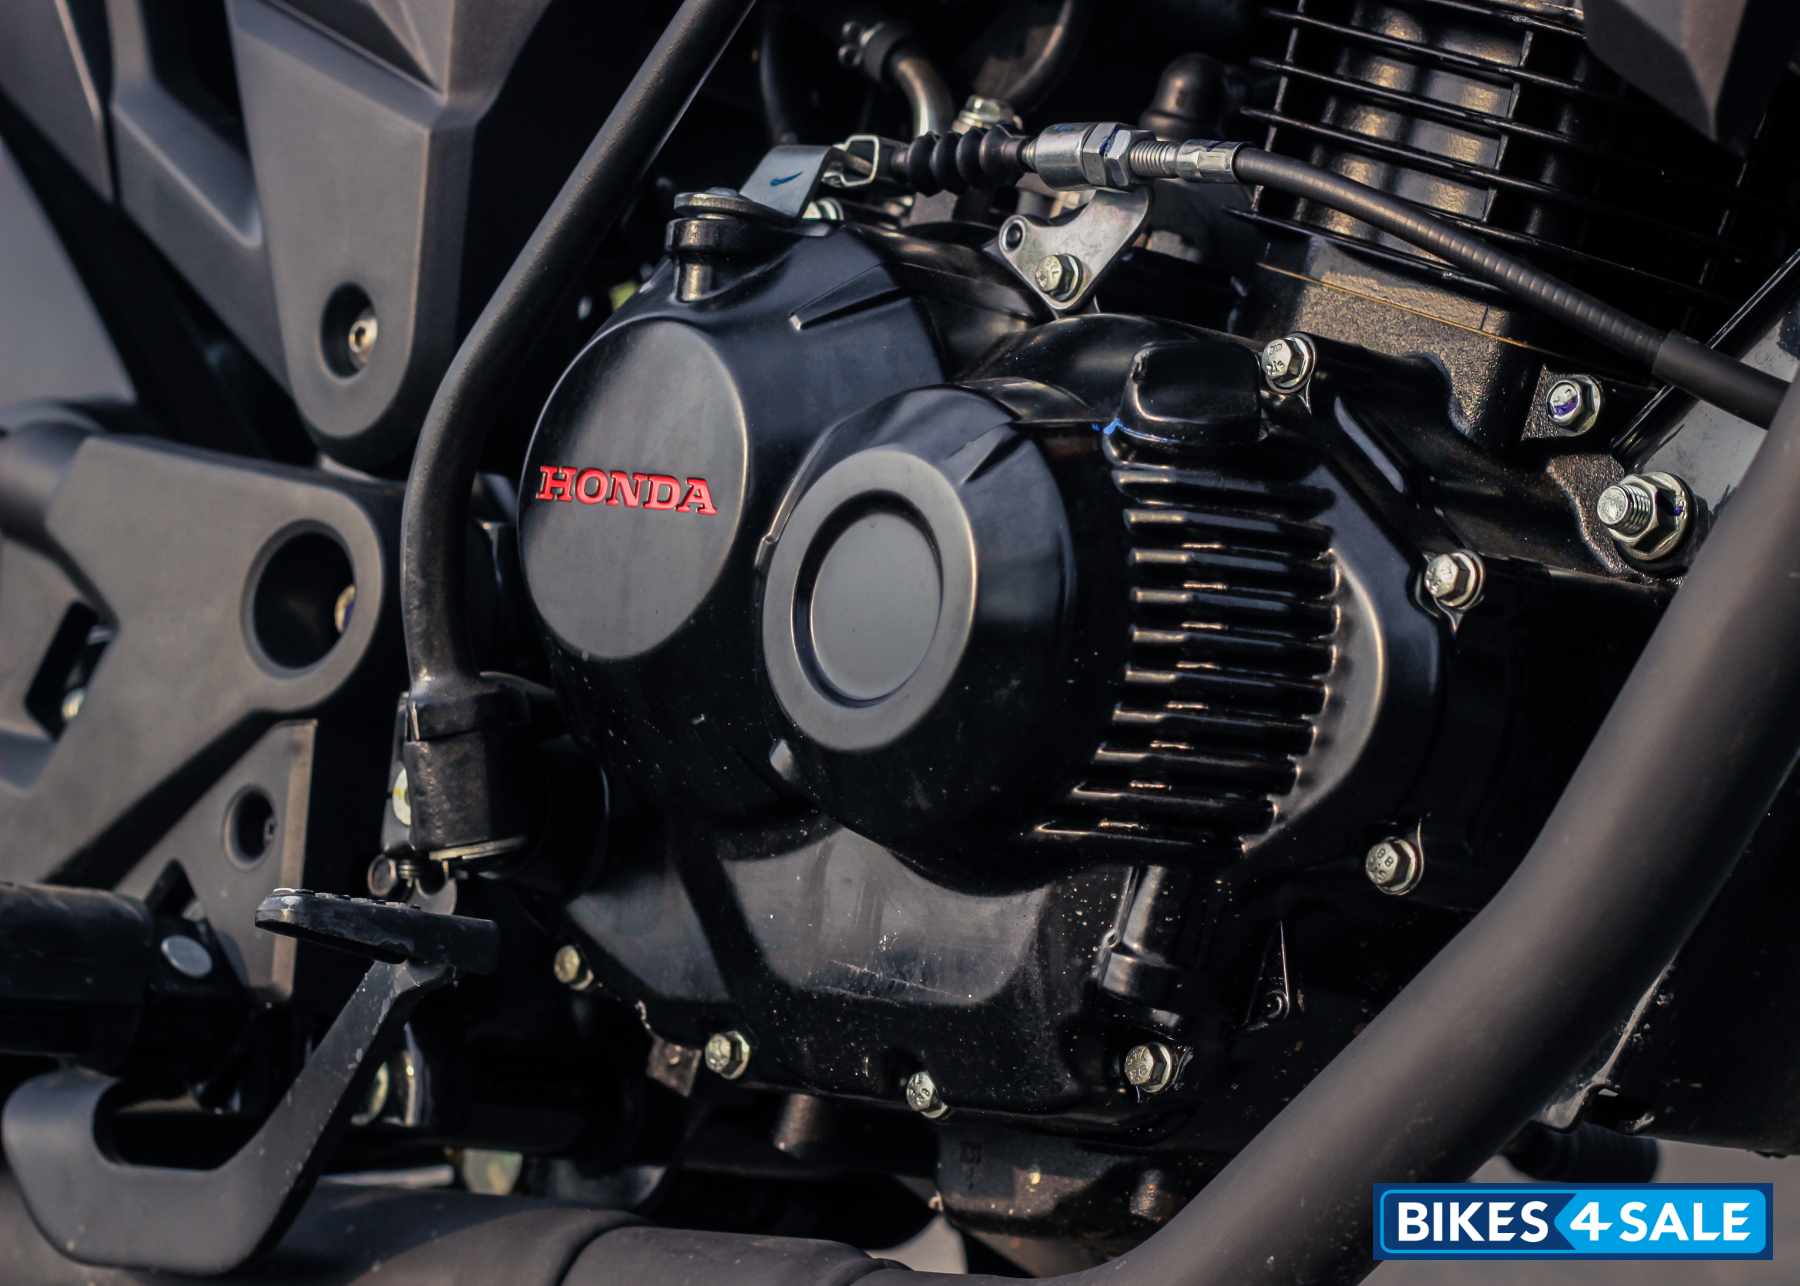 Honda XBlade - Powerful 160cc Engine with HET